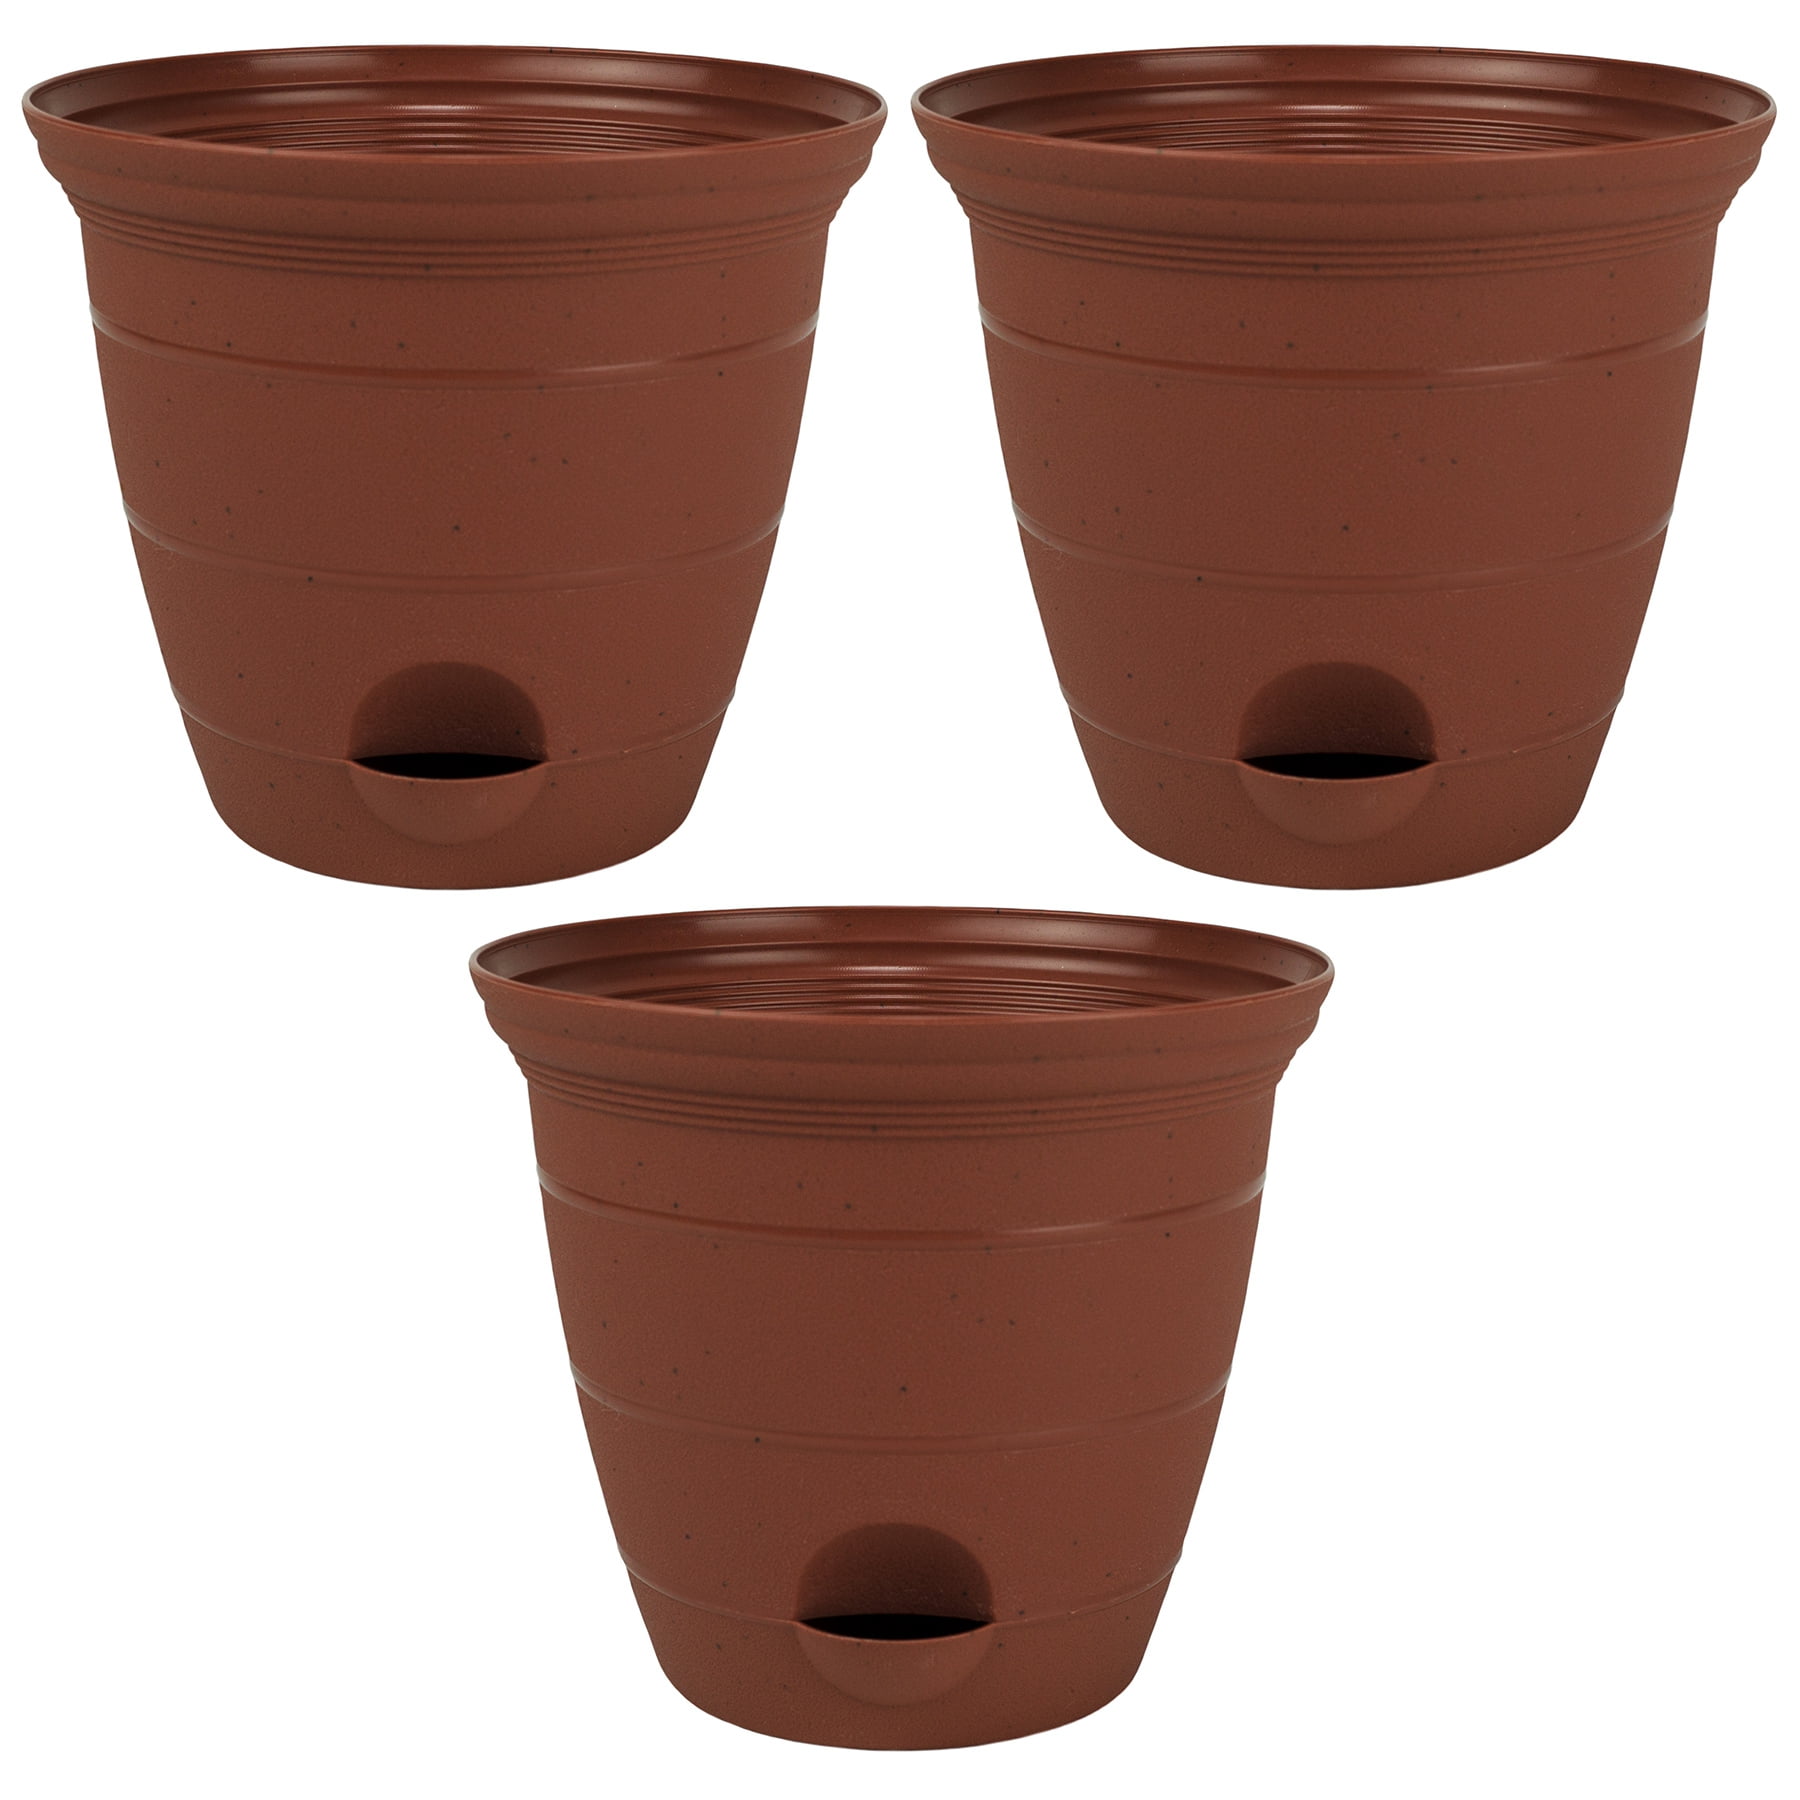 10x Plastic Square Plant Flower Pots Mini Planter Decorative Pot Macetas Tiestos 